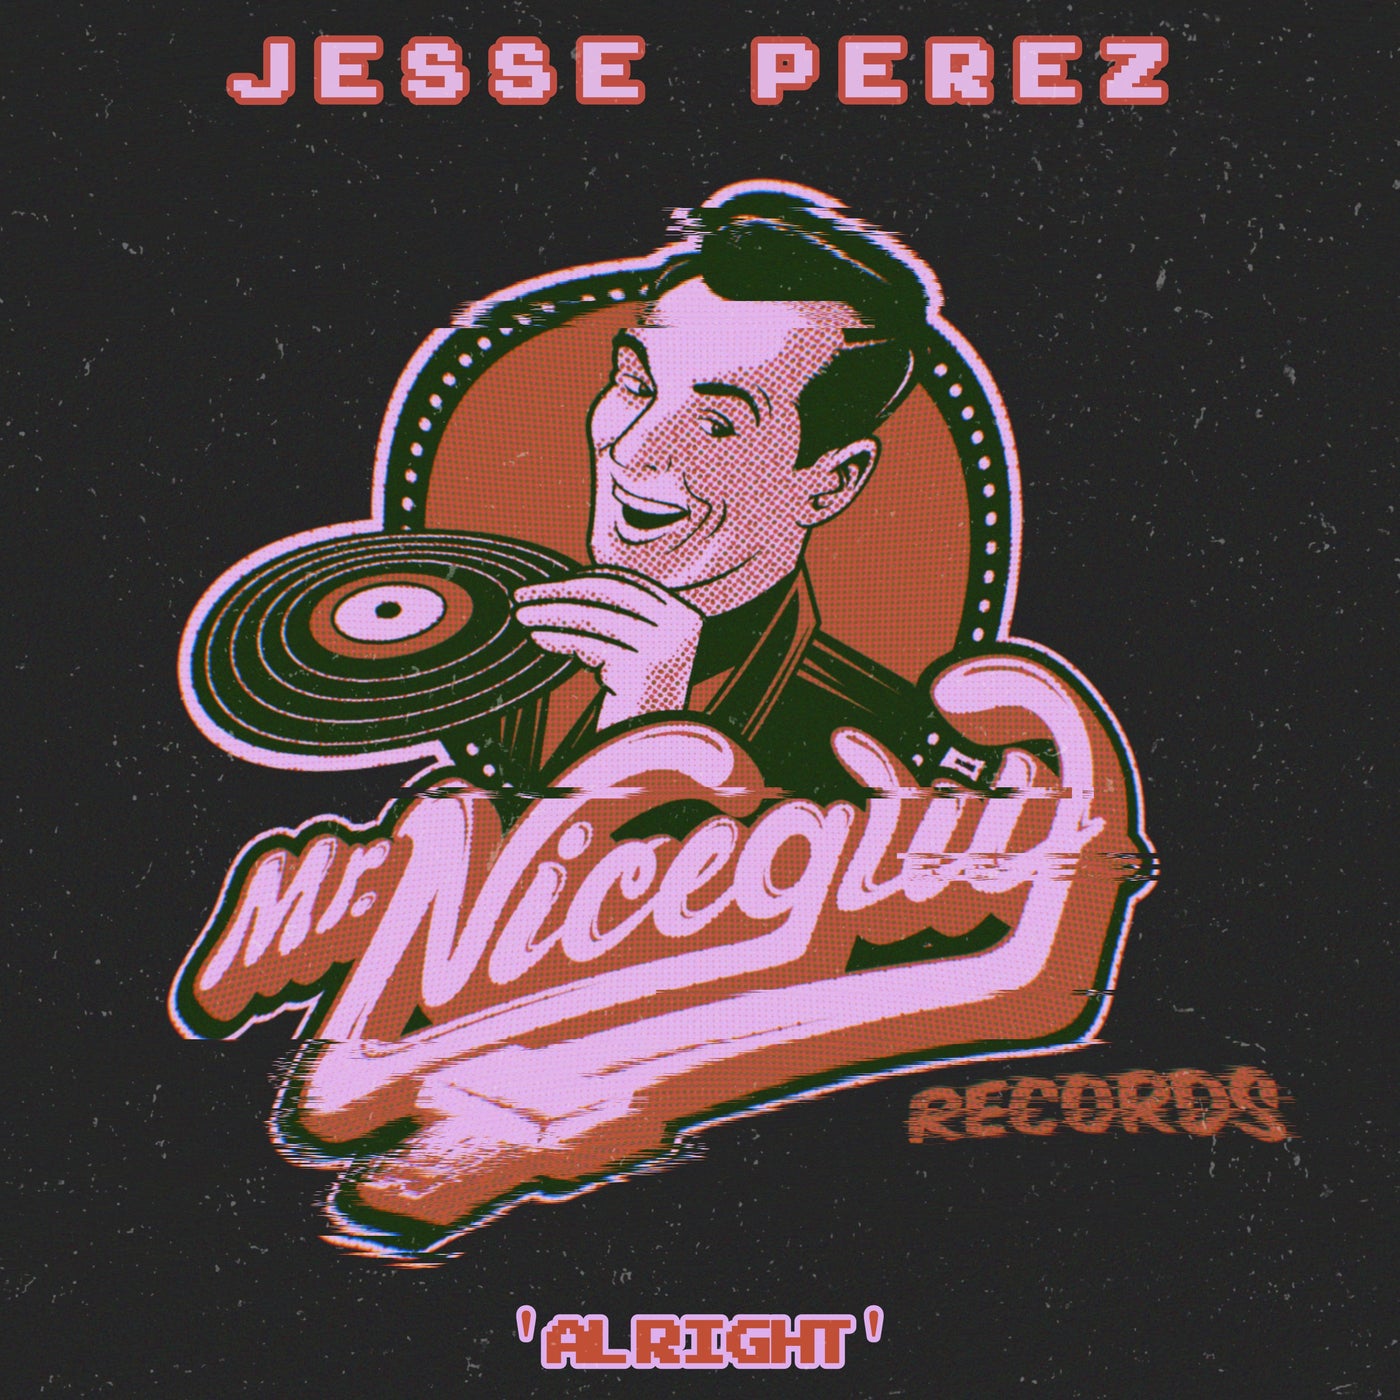 image cover: Jesse Perez - Alright on Mr. Nice Guy